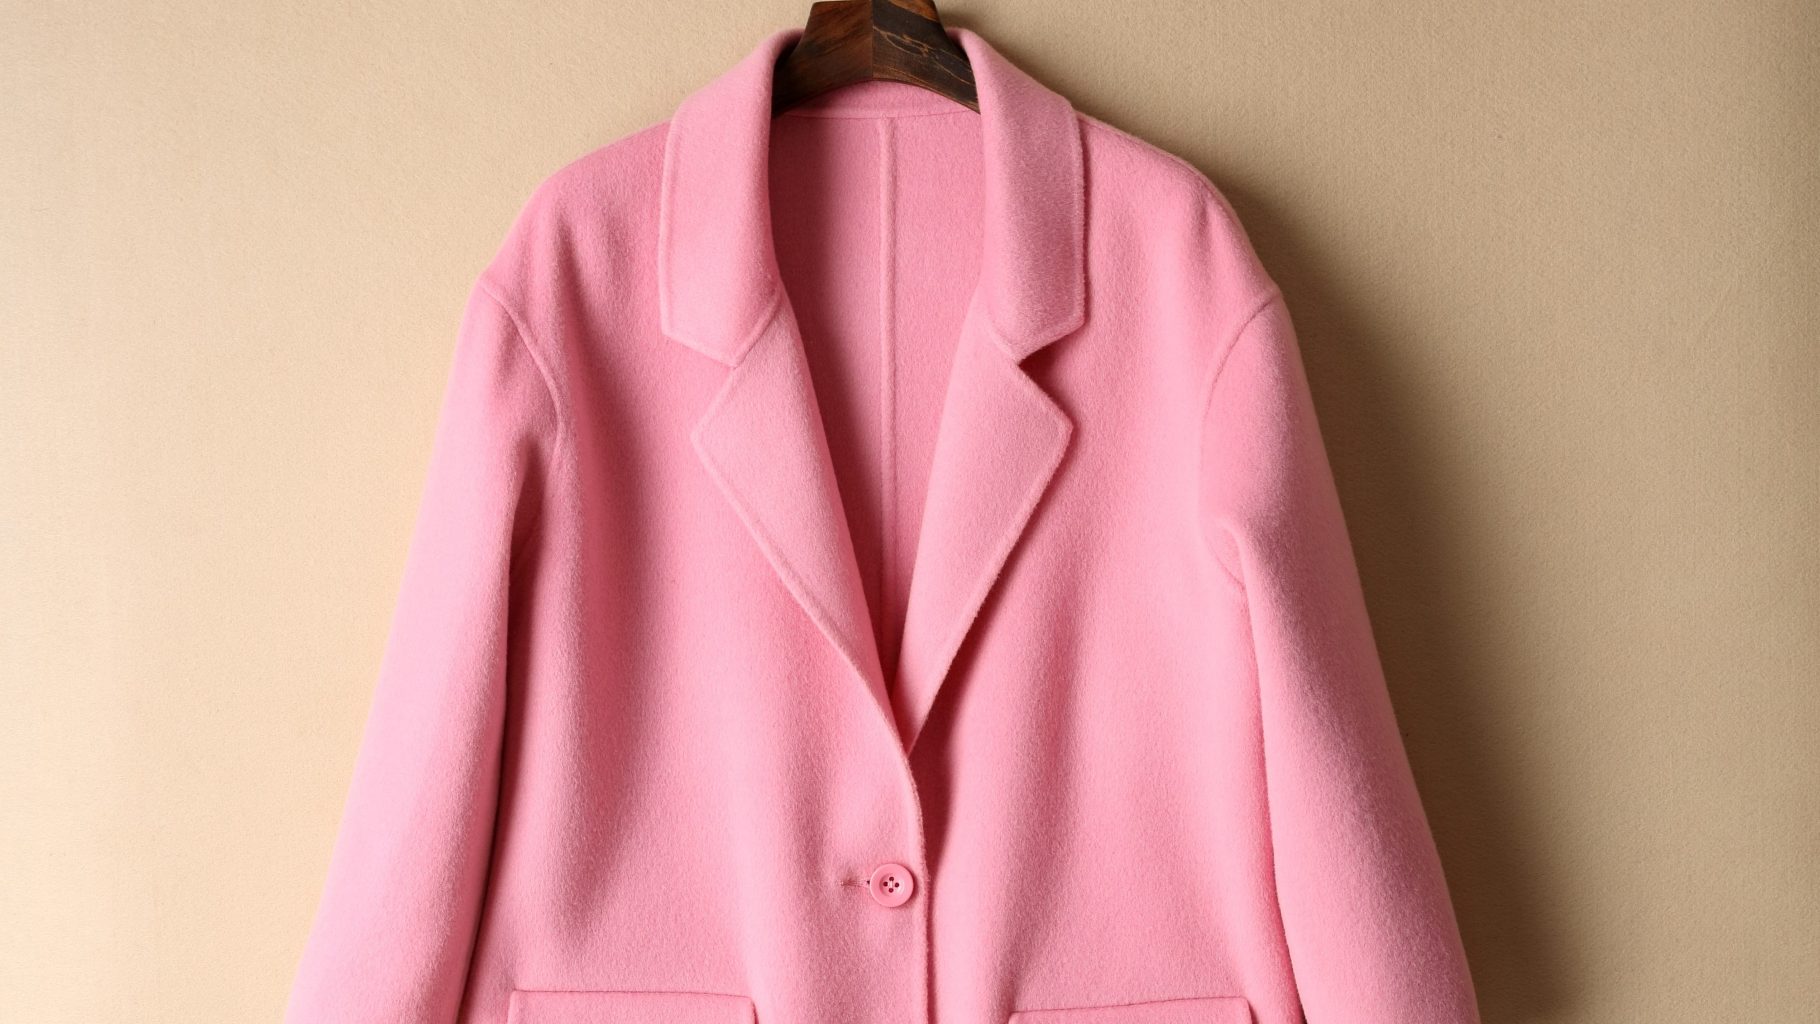 A pink coat on a hanger